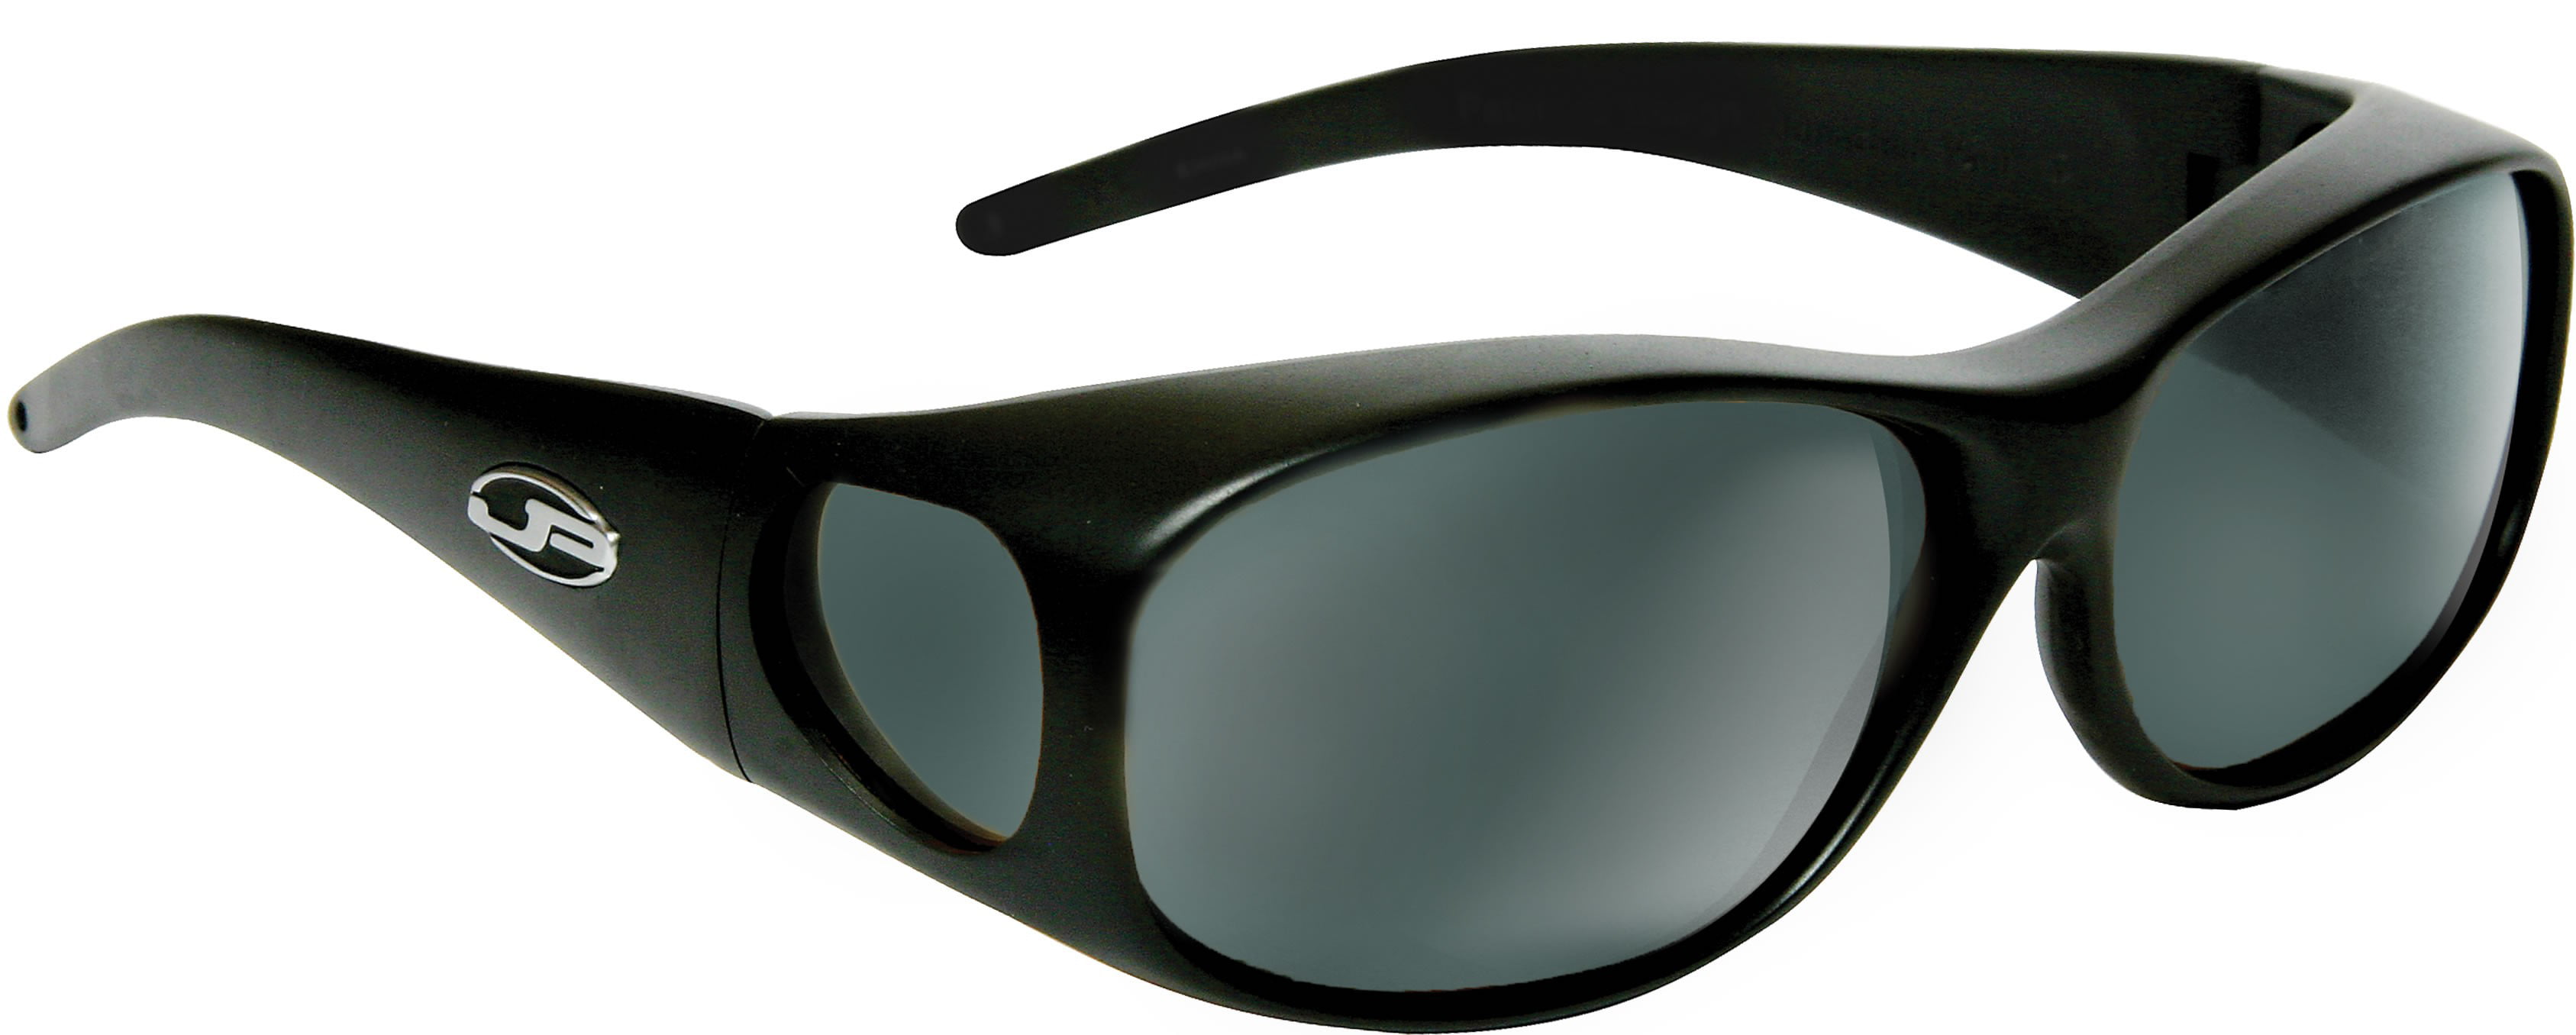 Fitovers Eyewear - Element Matte Black (Polarvue Gray) Designed to 